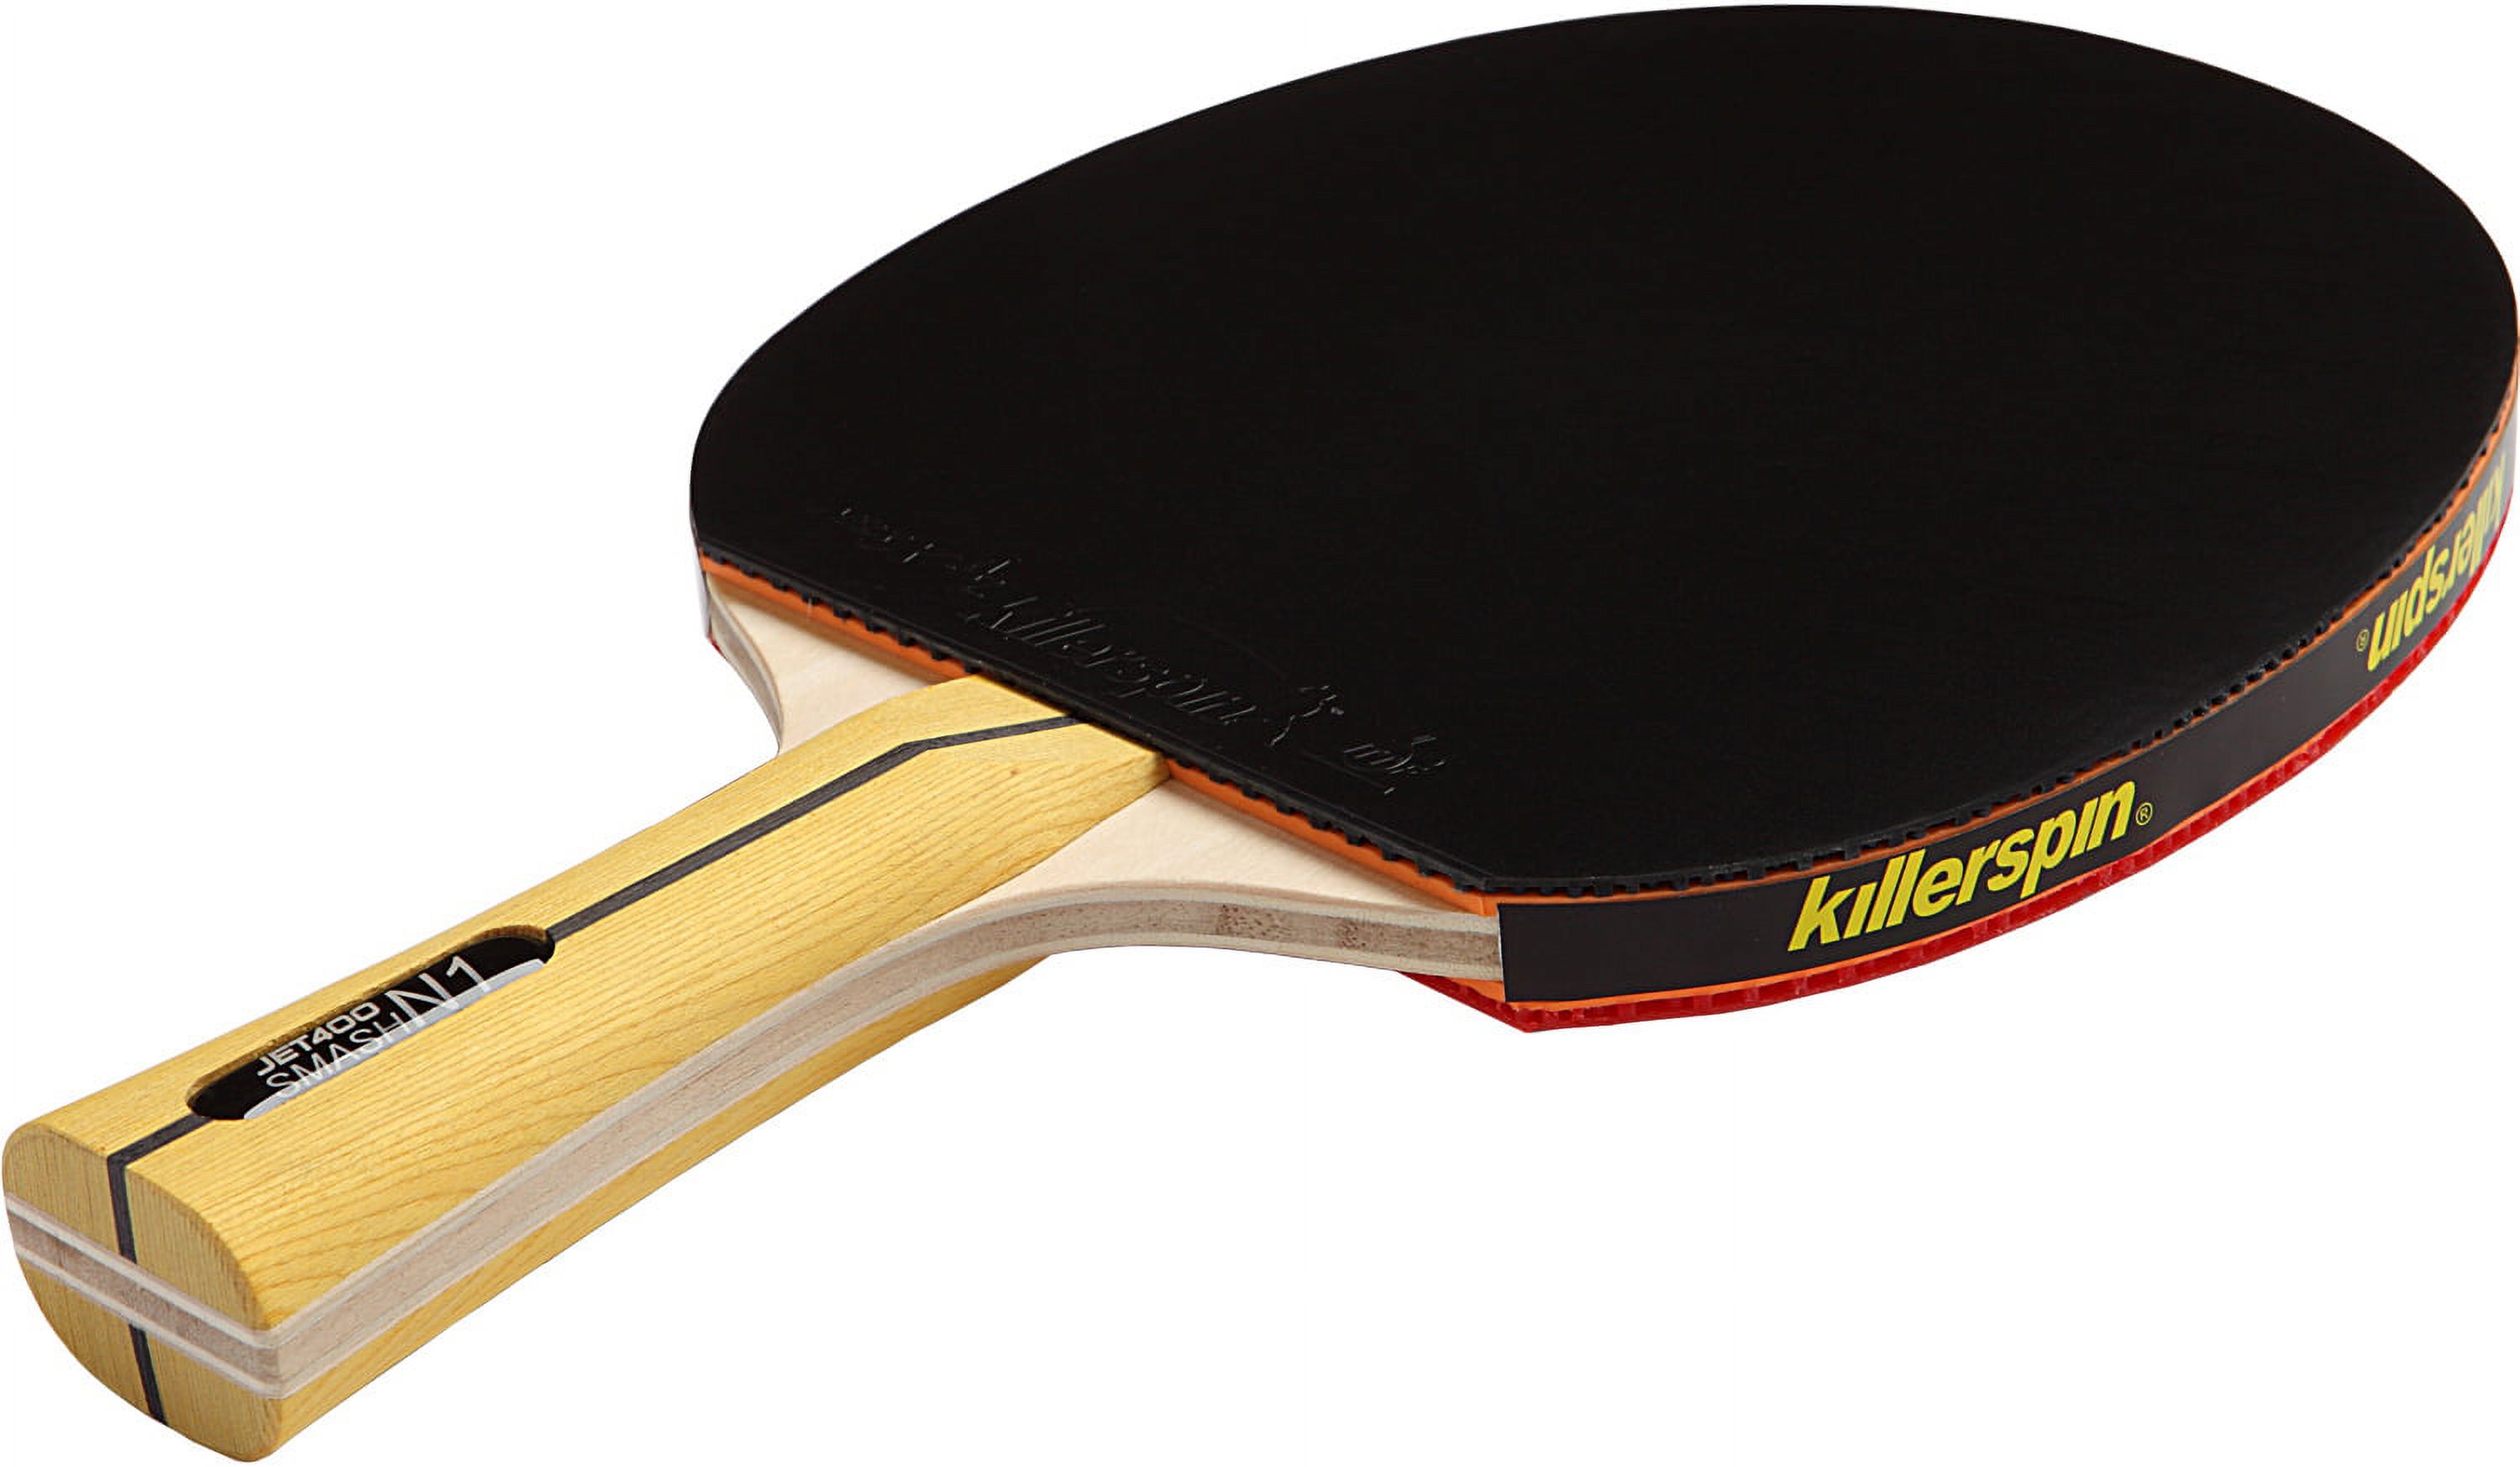 Killerspin JET400 Table Tennis Paddle, Ping Pong Racket - image 5 of 8